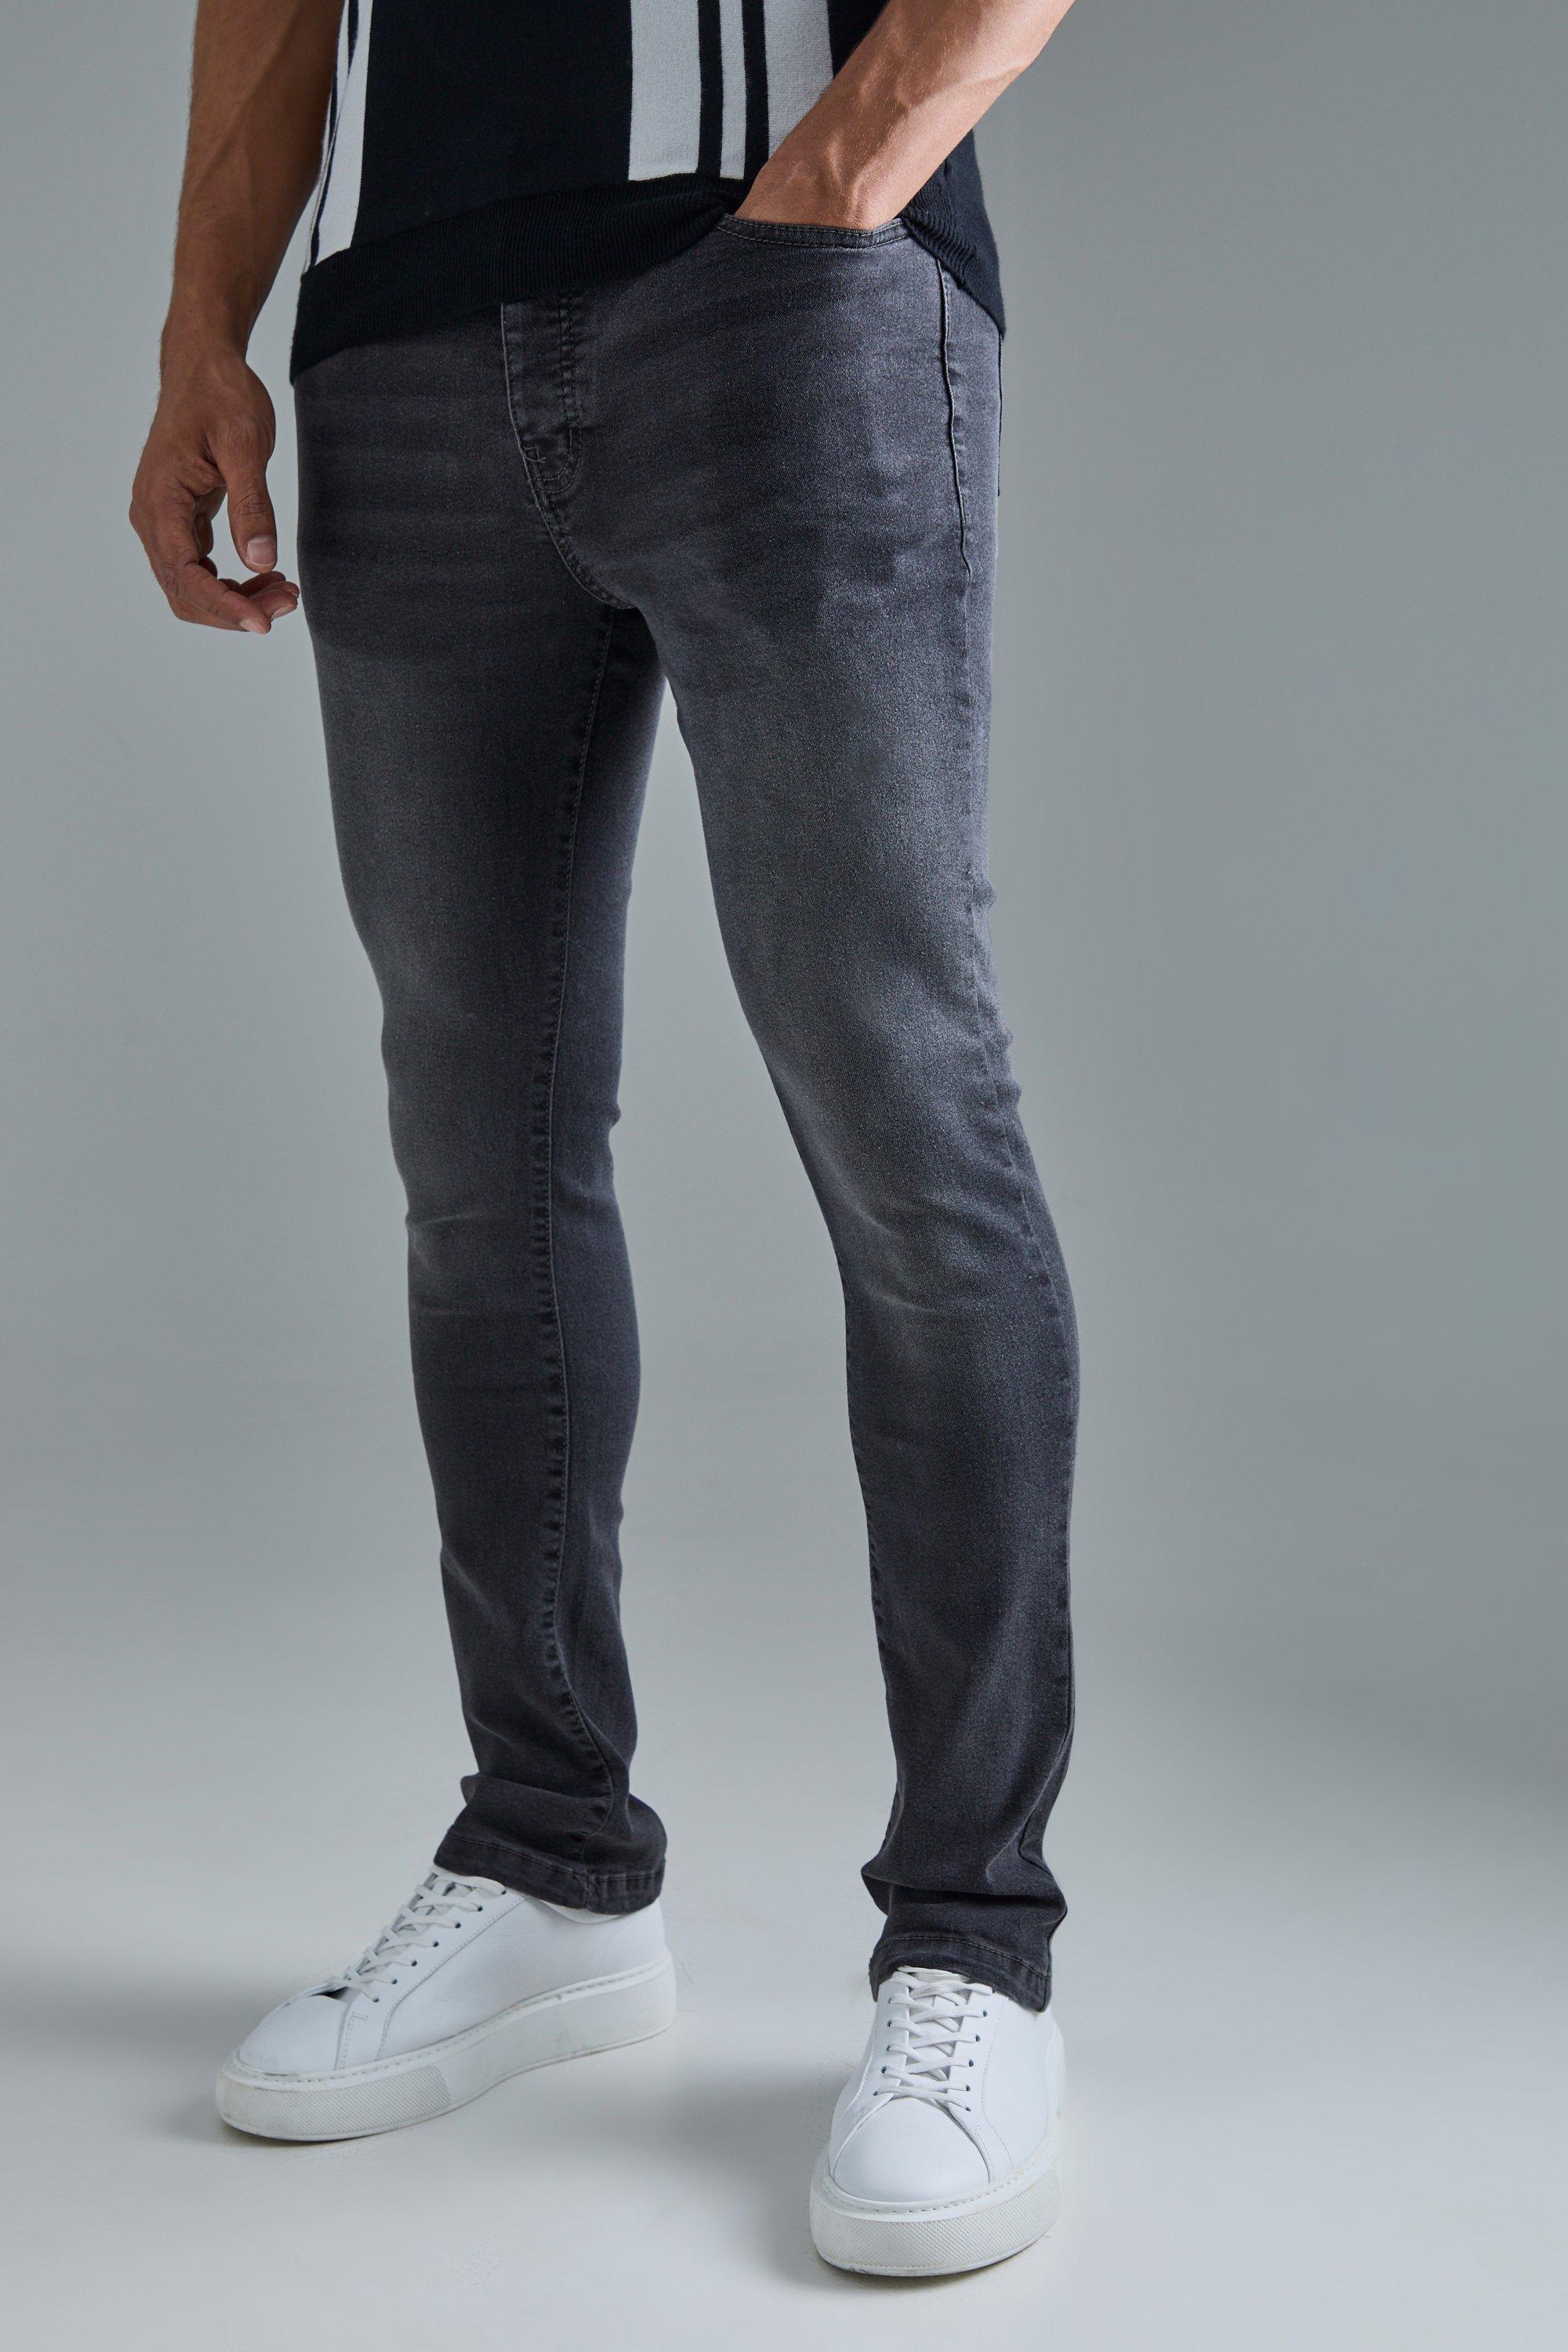 Image of Jeans a zampa Skinny Fit Stretch in grigio antracite, Grigio